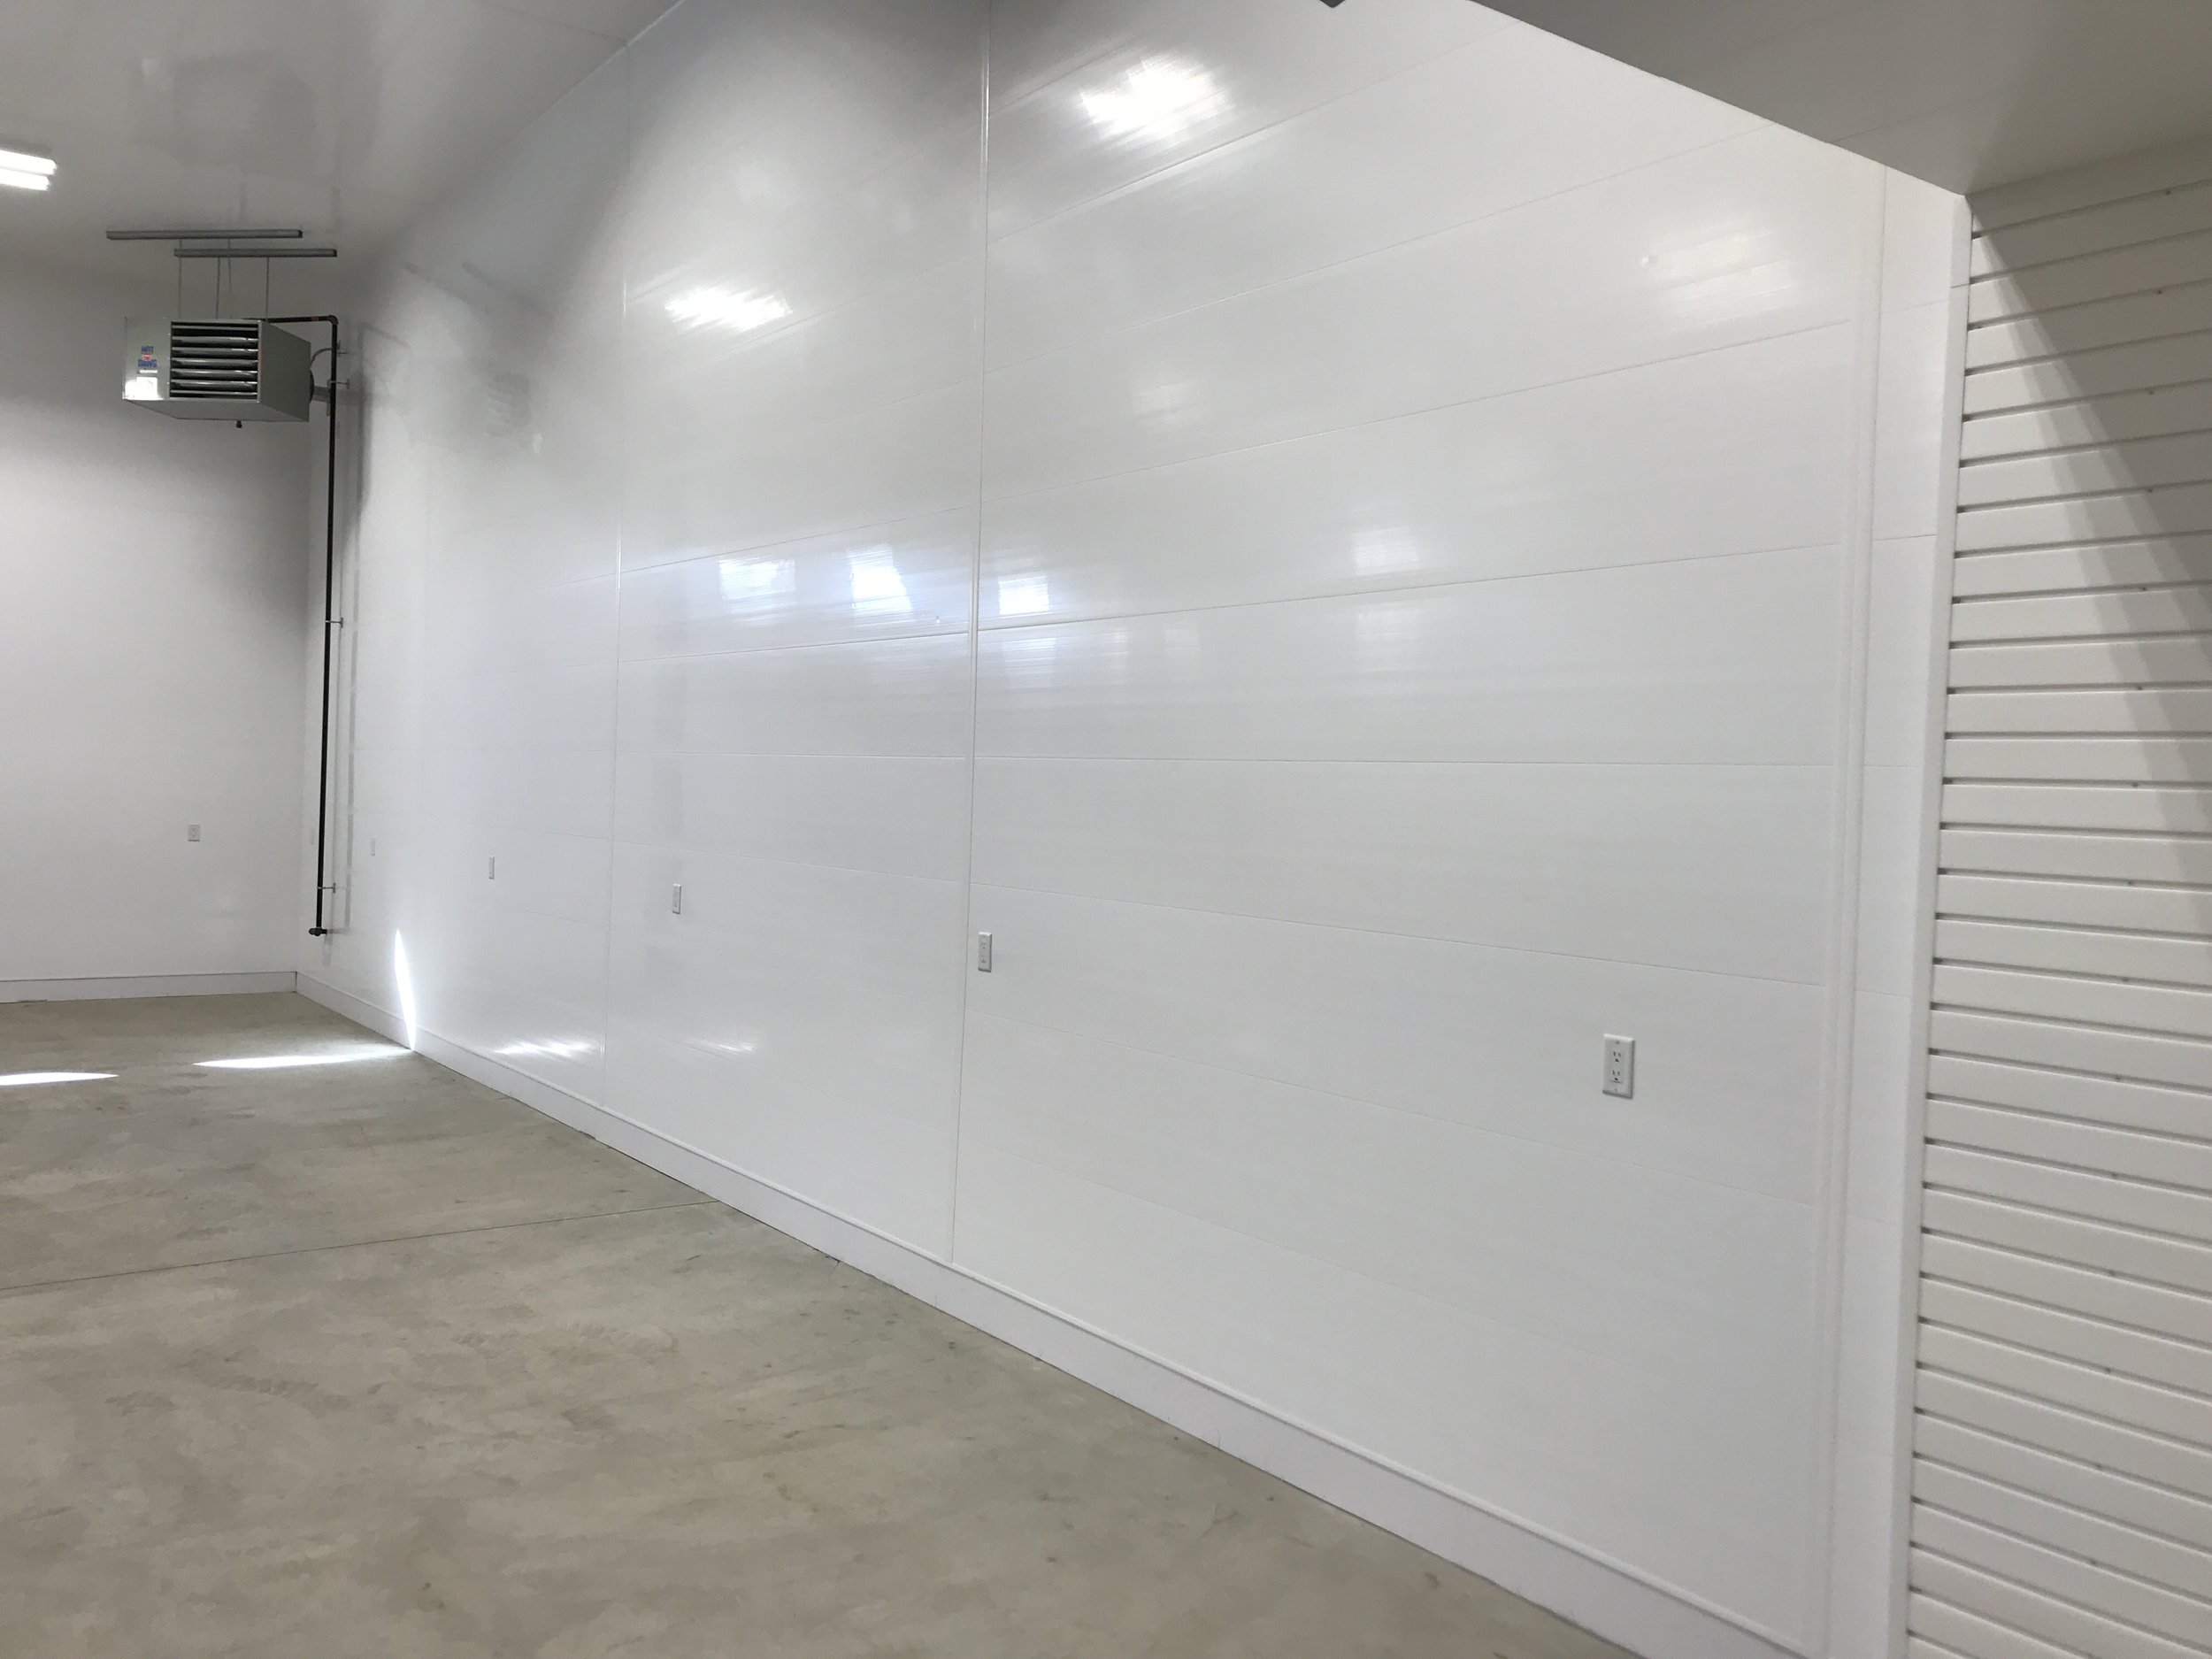 PVC Wall Panels Installed, 40 x 50 Shop